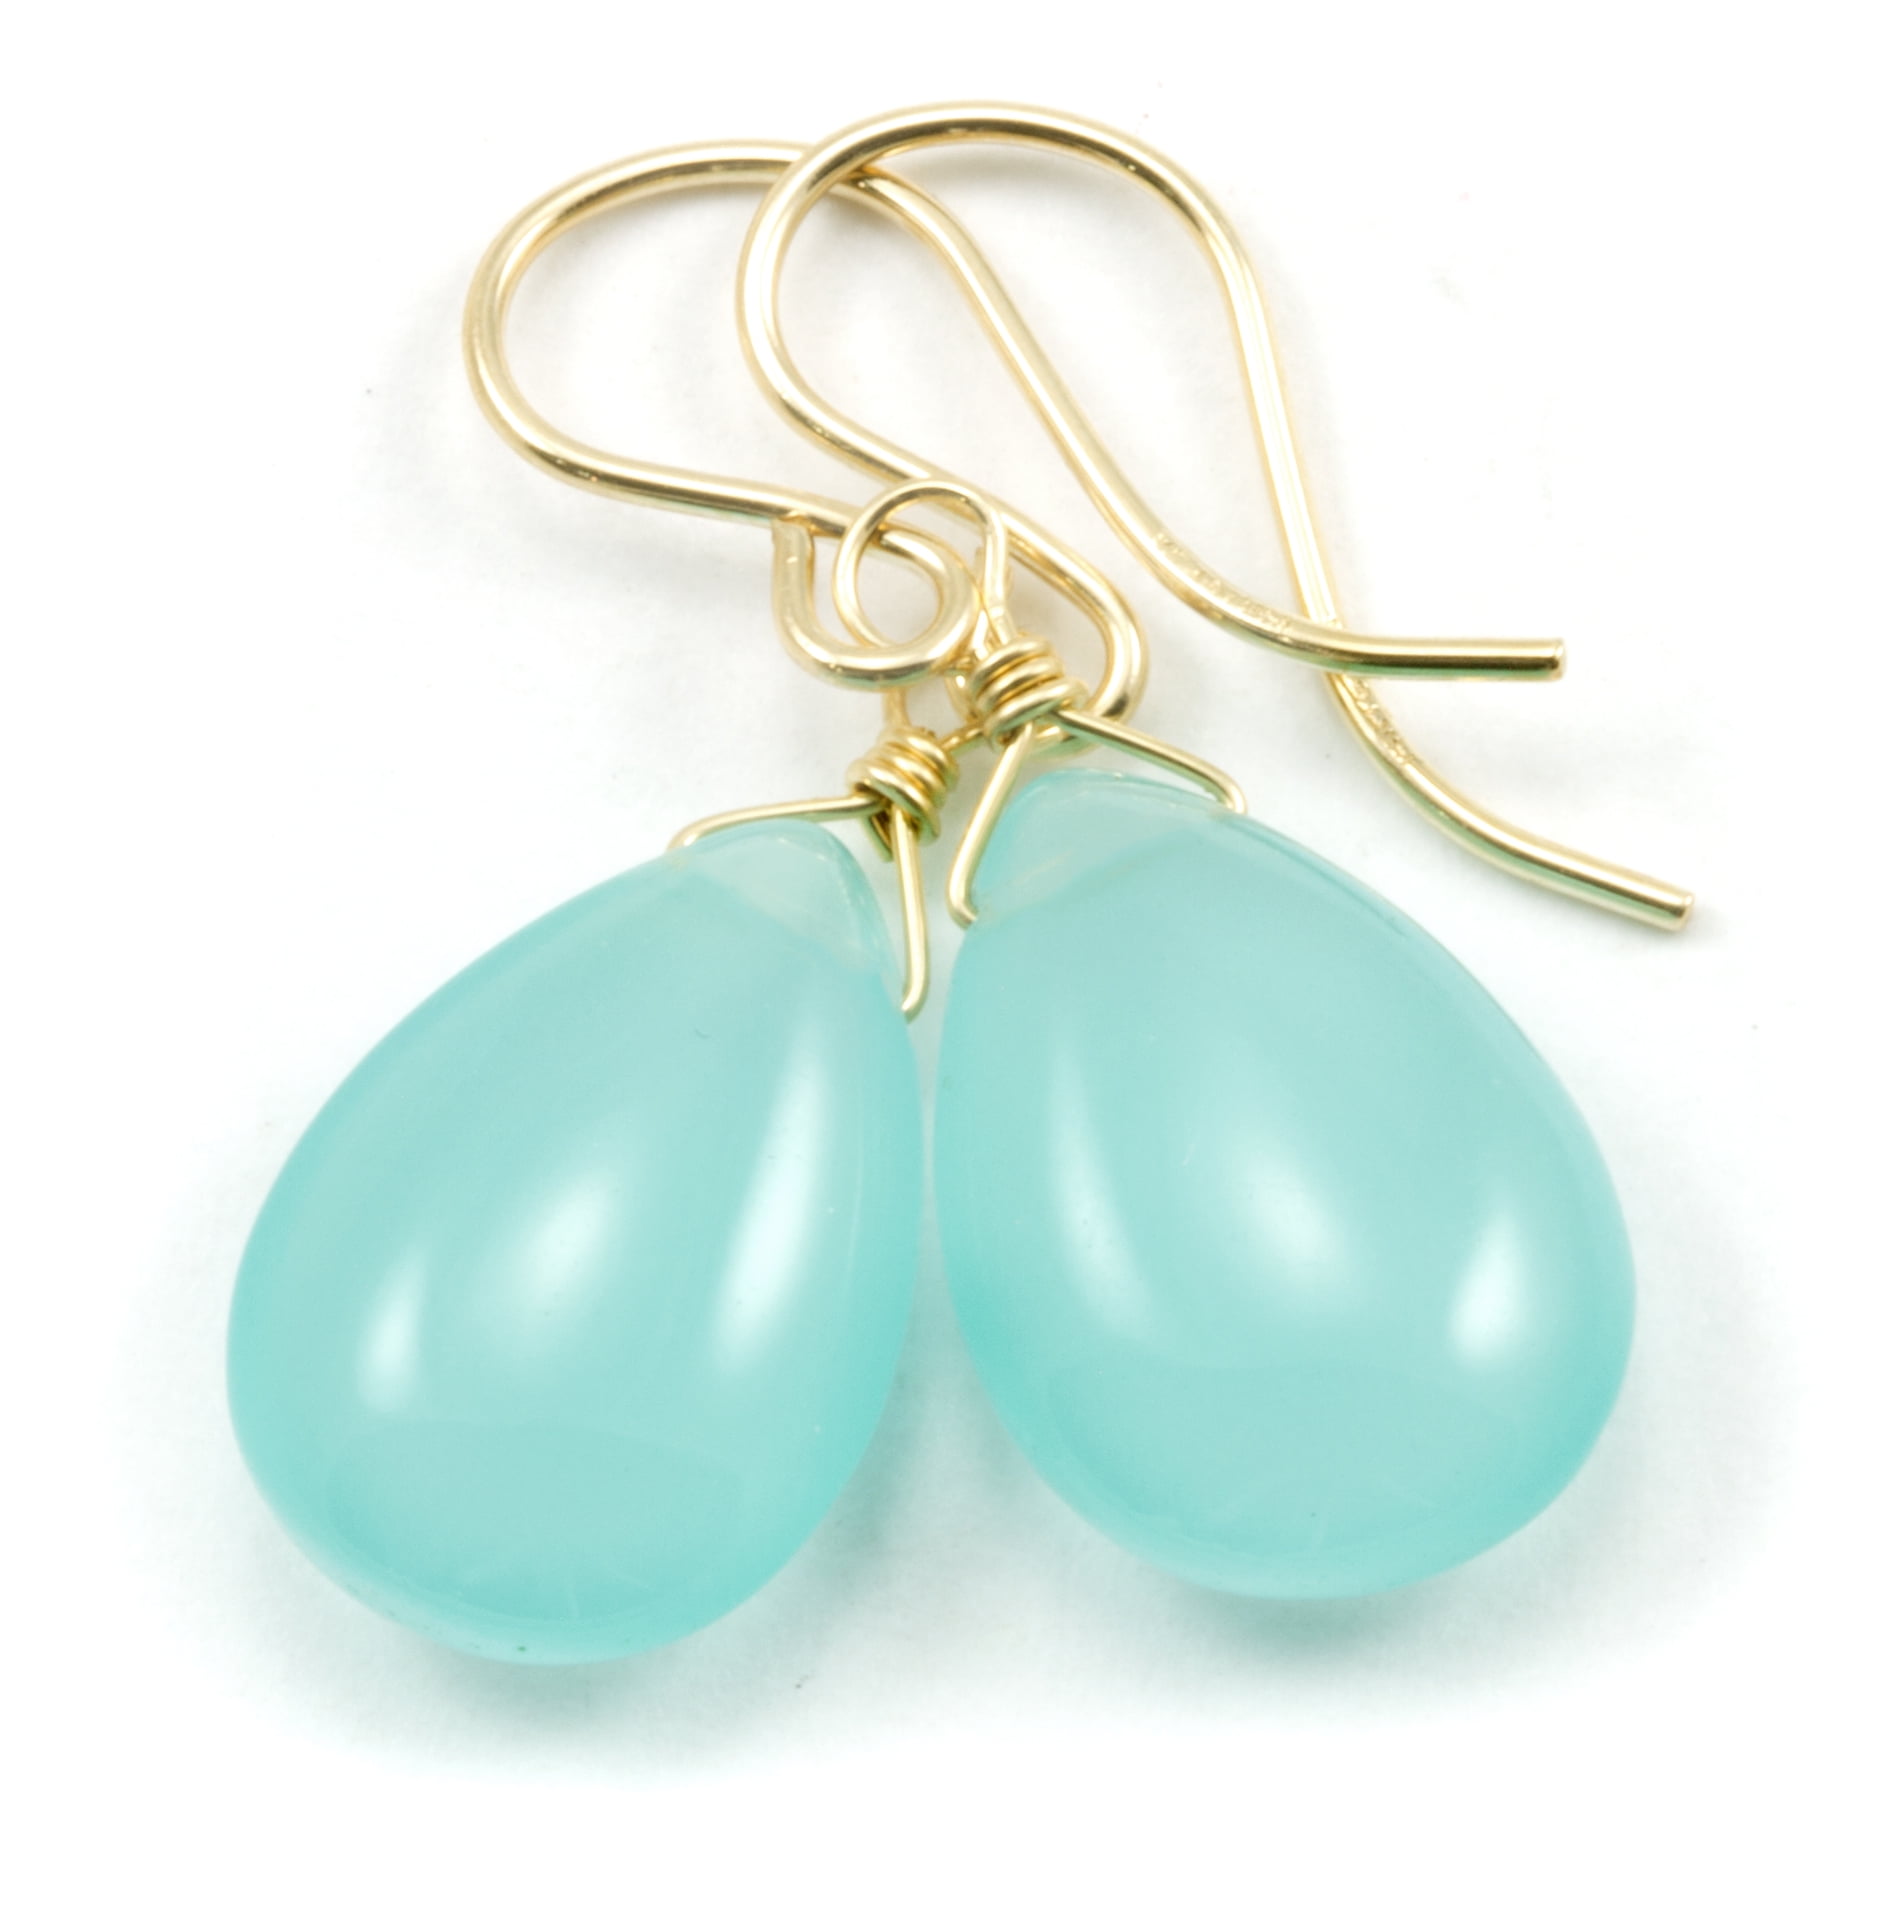 Aqua chalcedony earrings  genuine gemstone  14k gold filled  handmade E-50